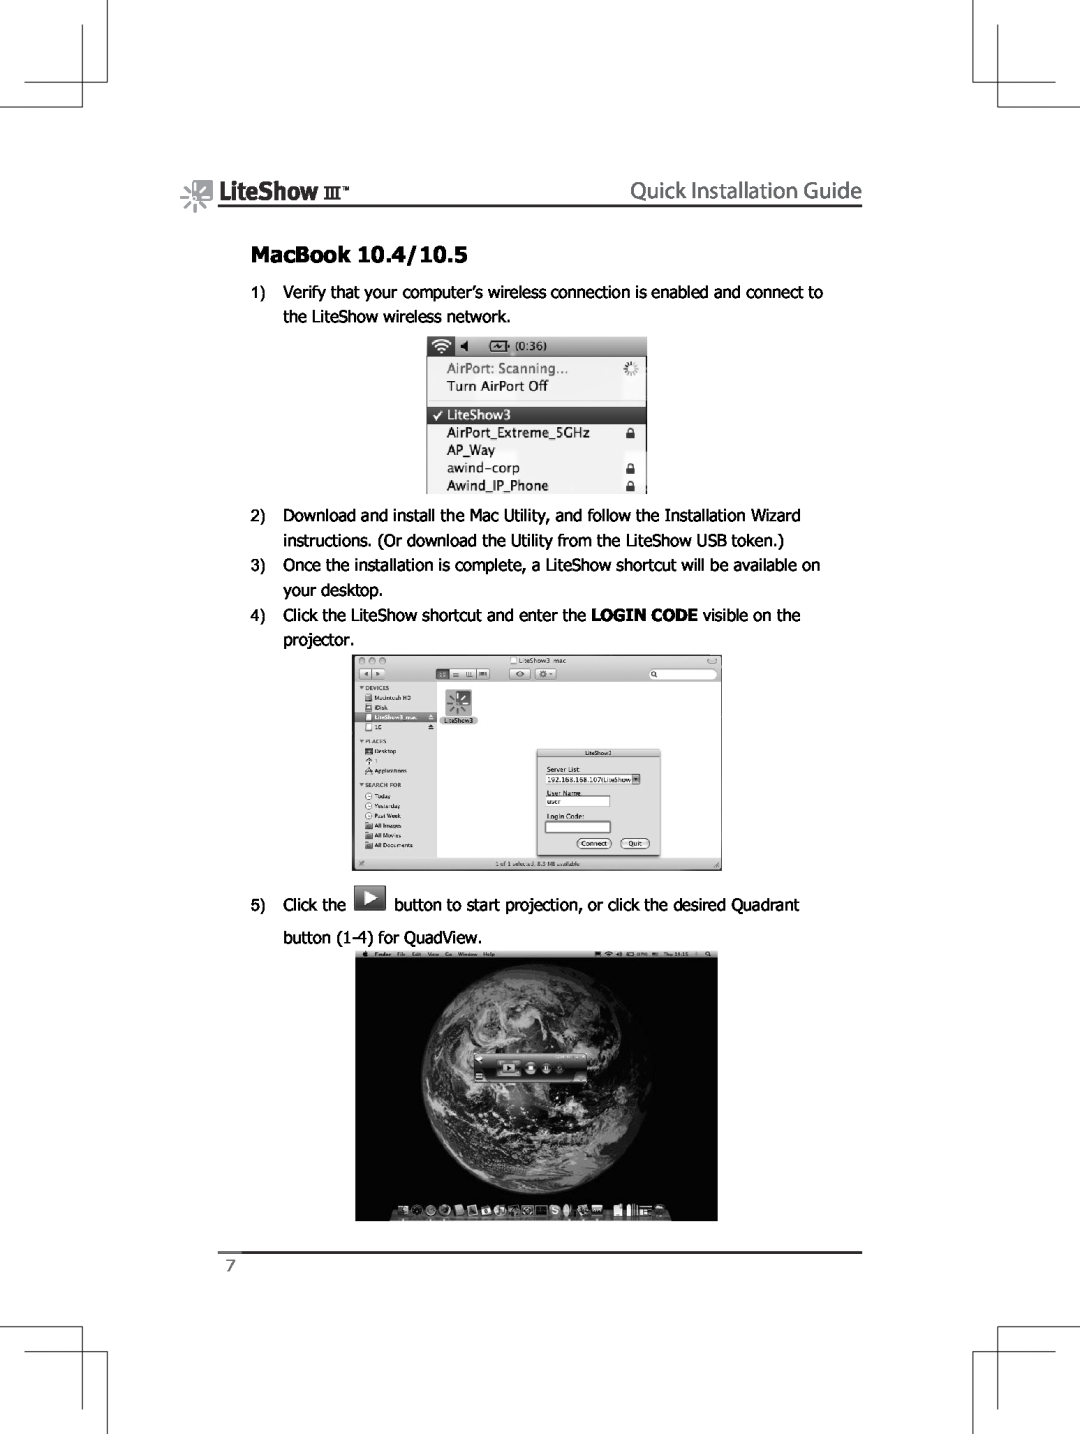 InFocus INLITESHOW3 manual MacBook 10.4/10.5, Quick Installation Guide 